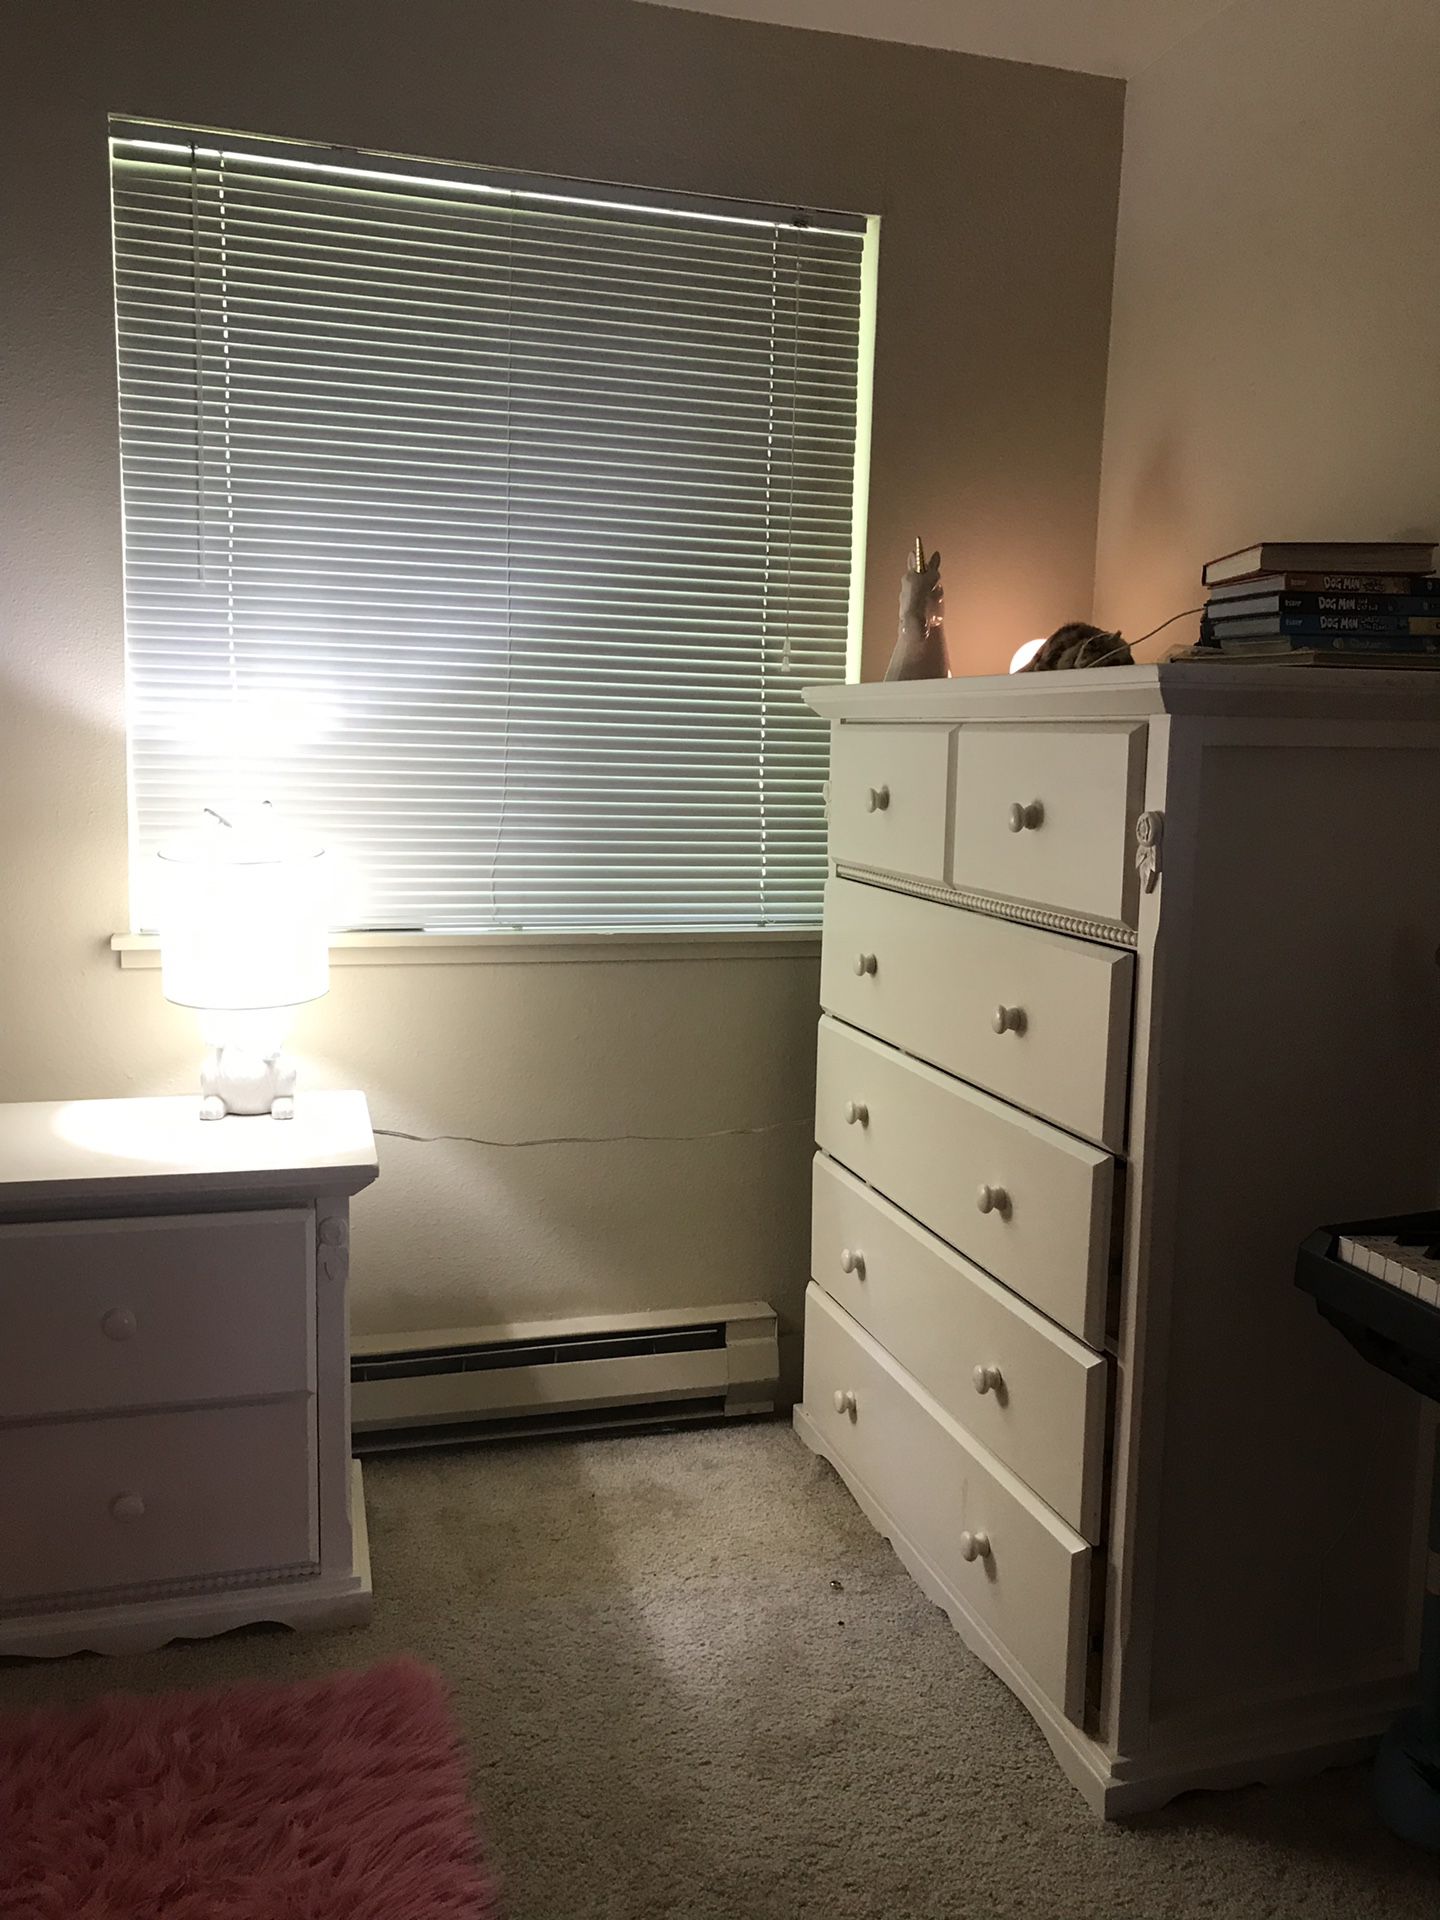 White twin bedroom set for Sale in Redmond, WA - OfferUp